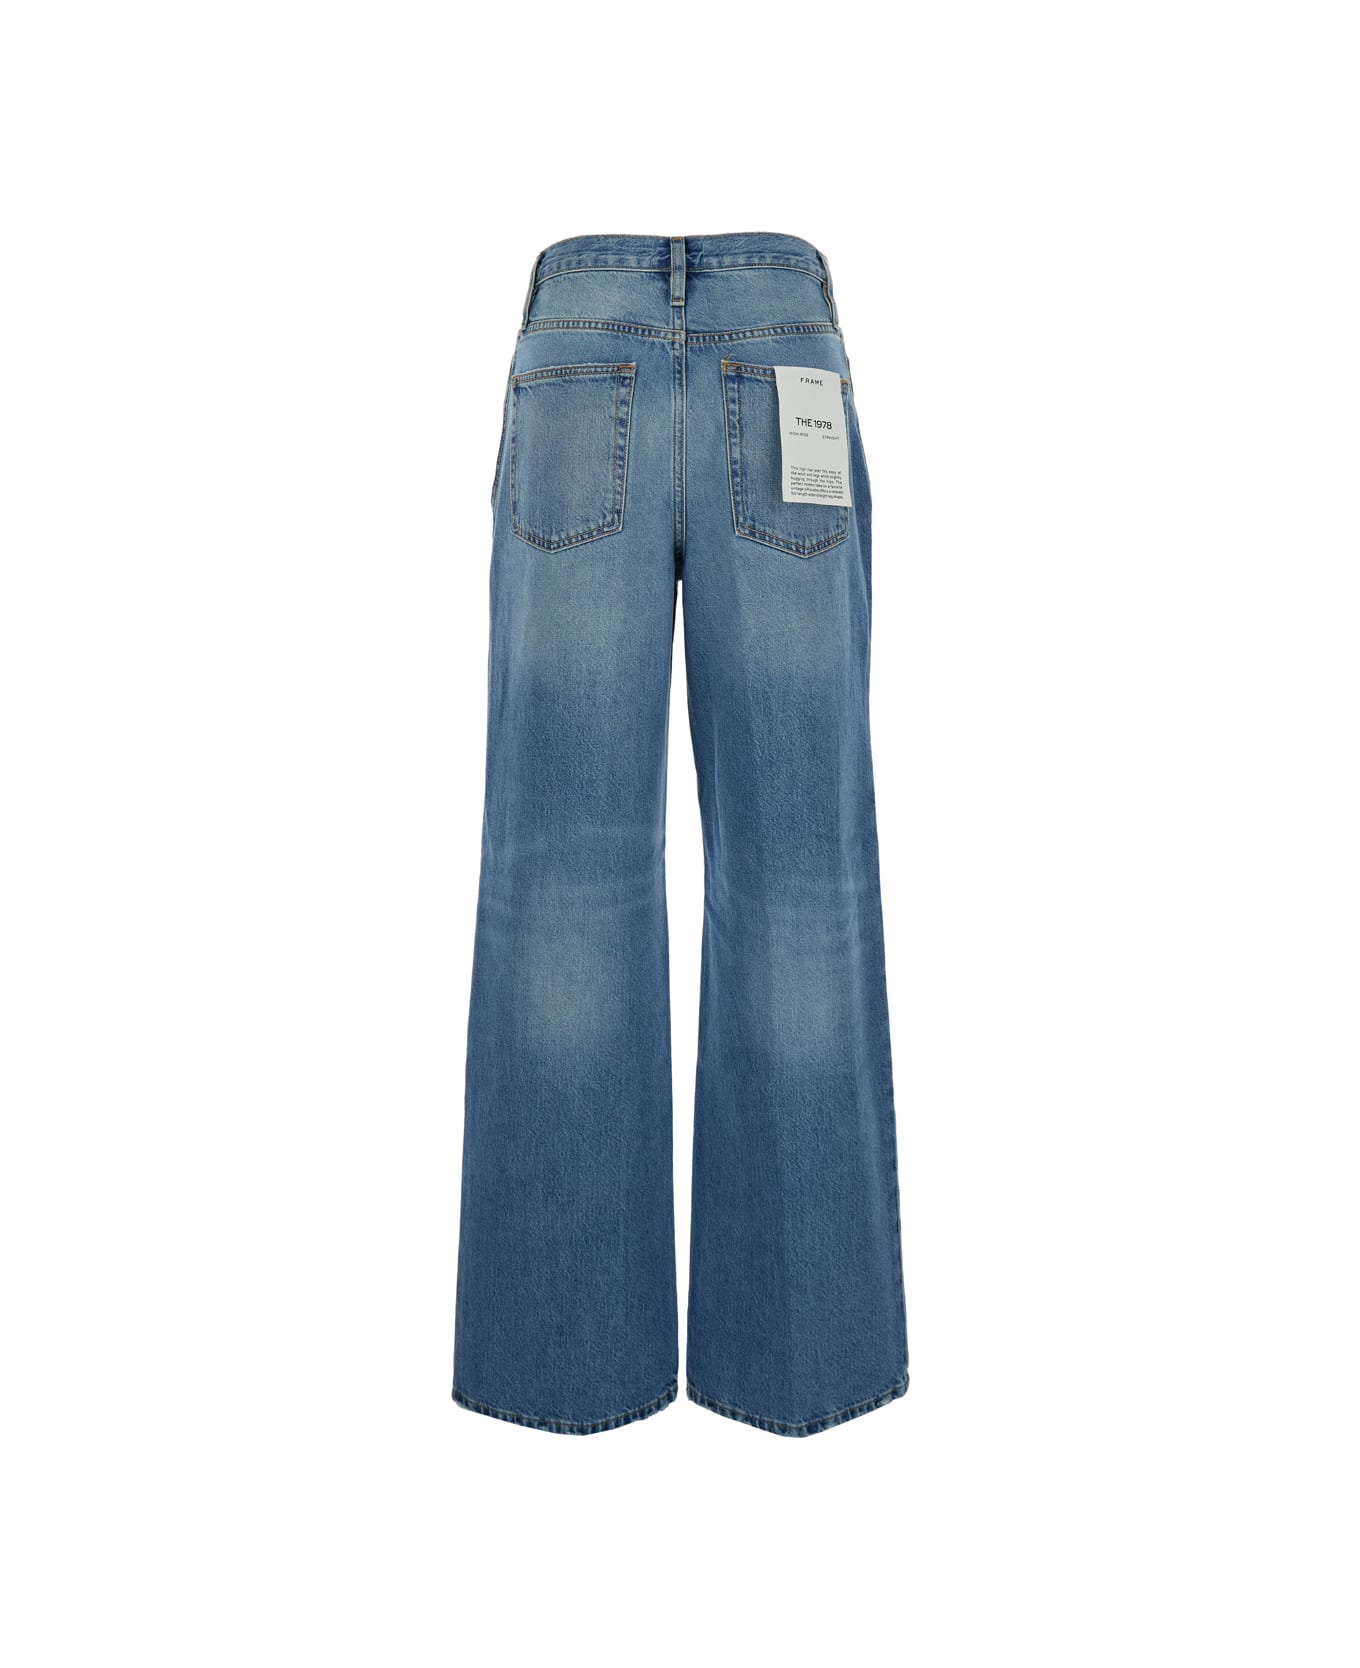 Frame Blue Denim 'the 1978' High Waist Jeans In Cotton Woman - Blu